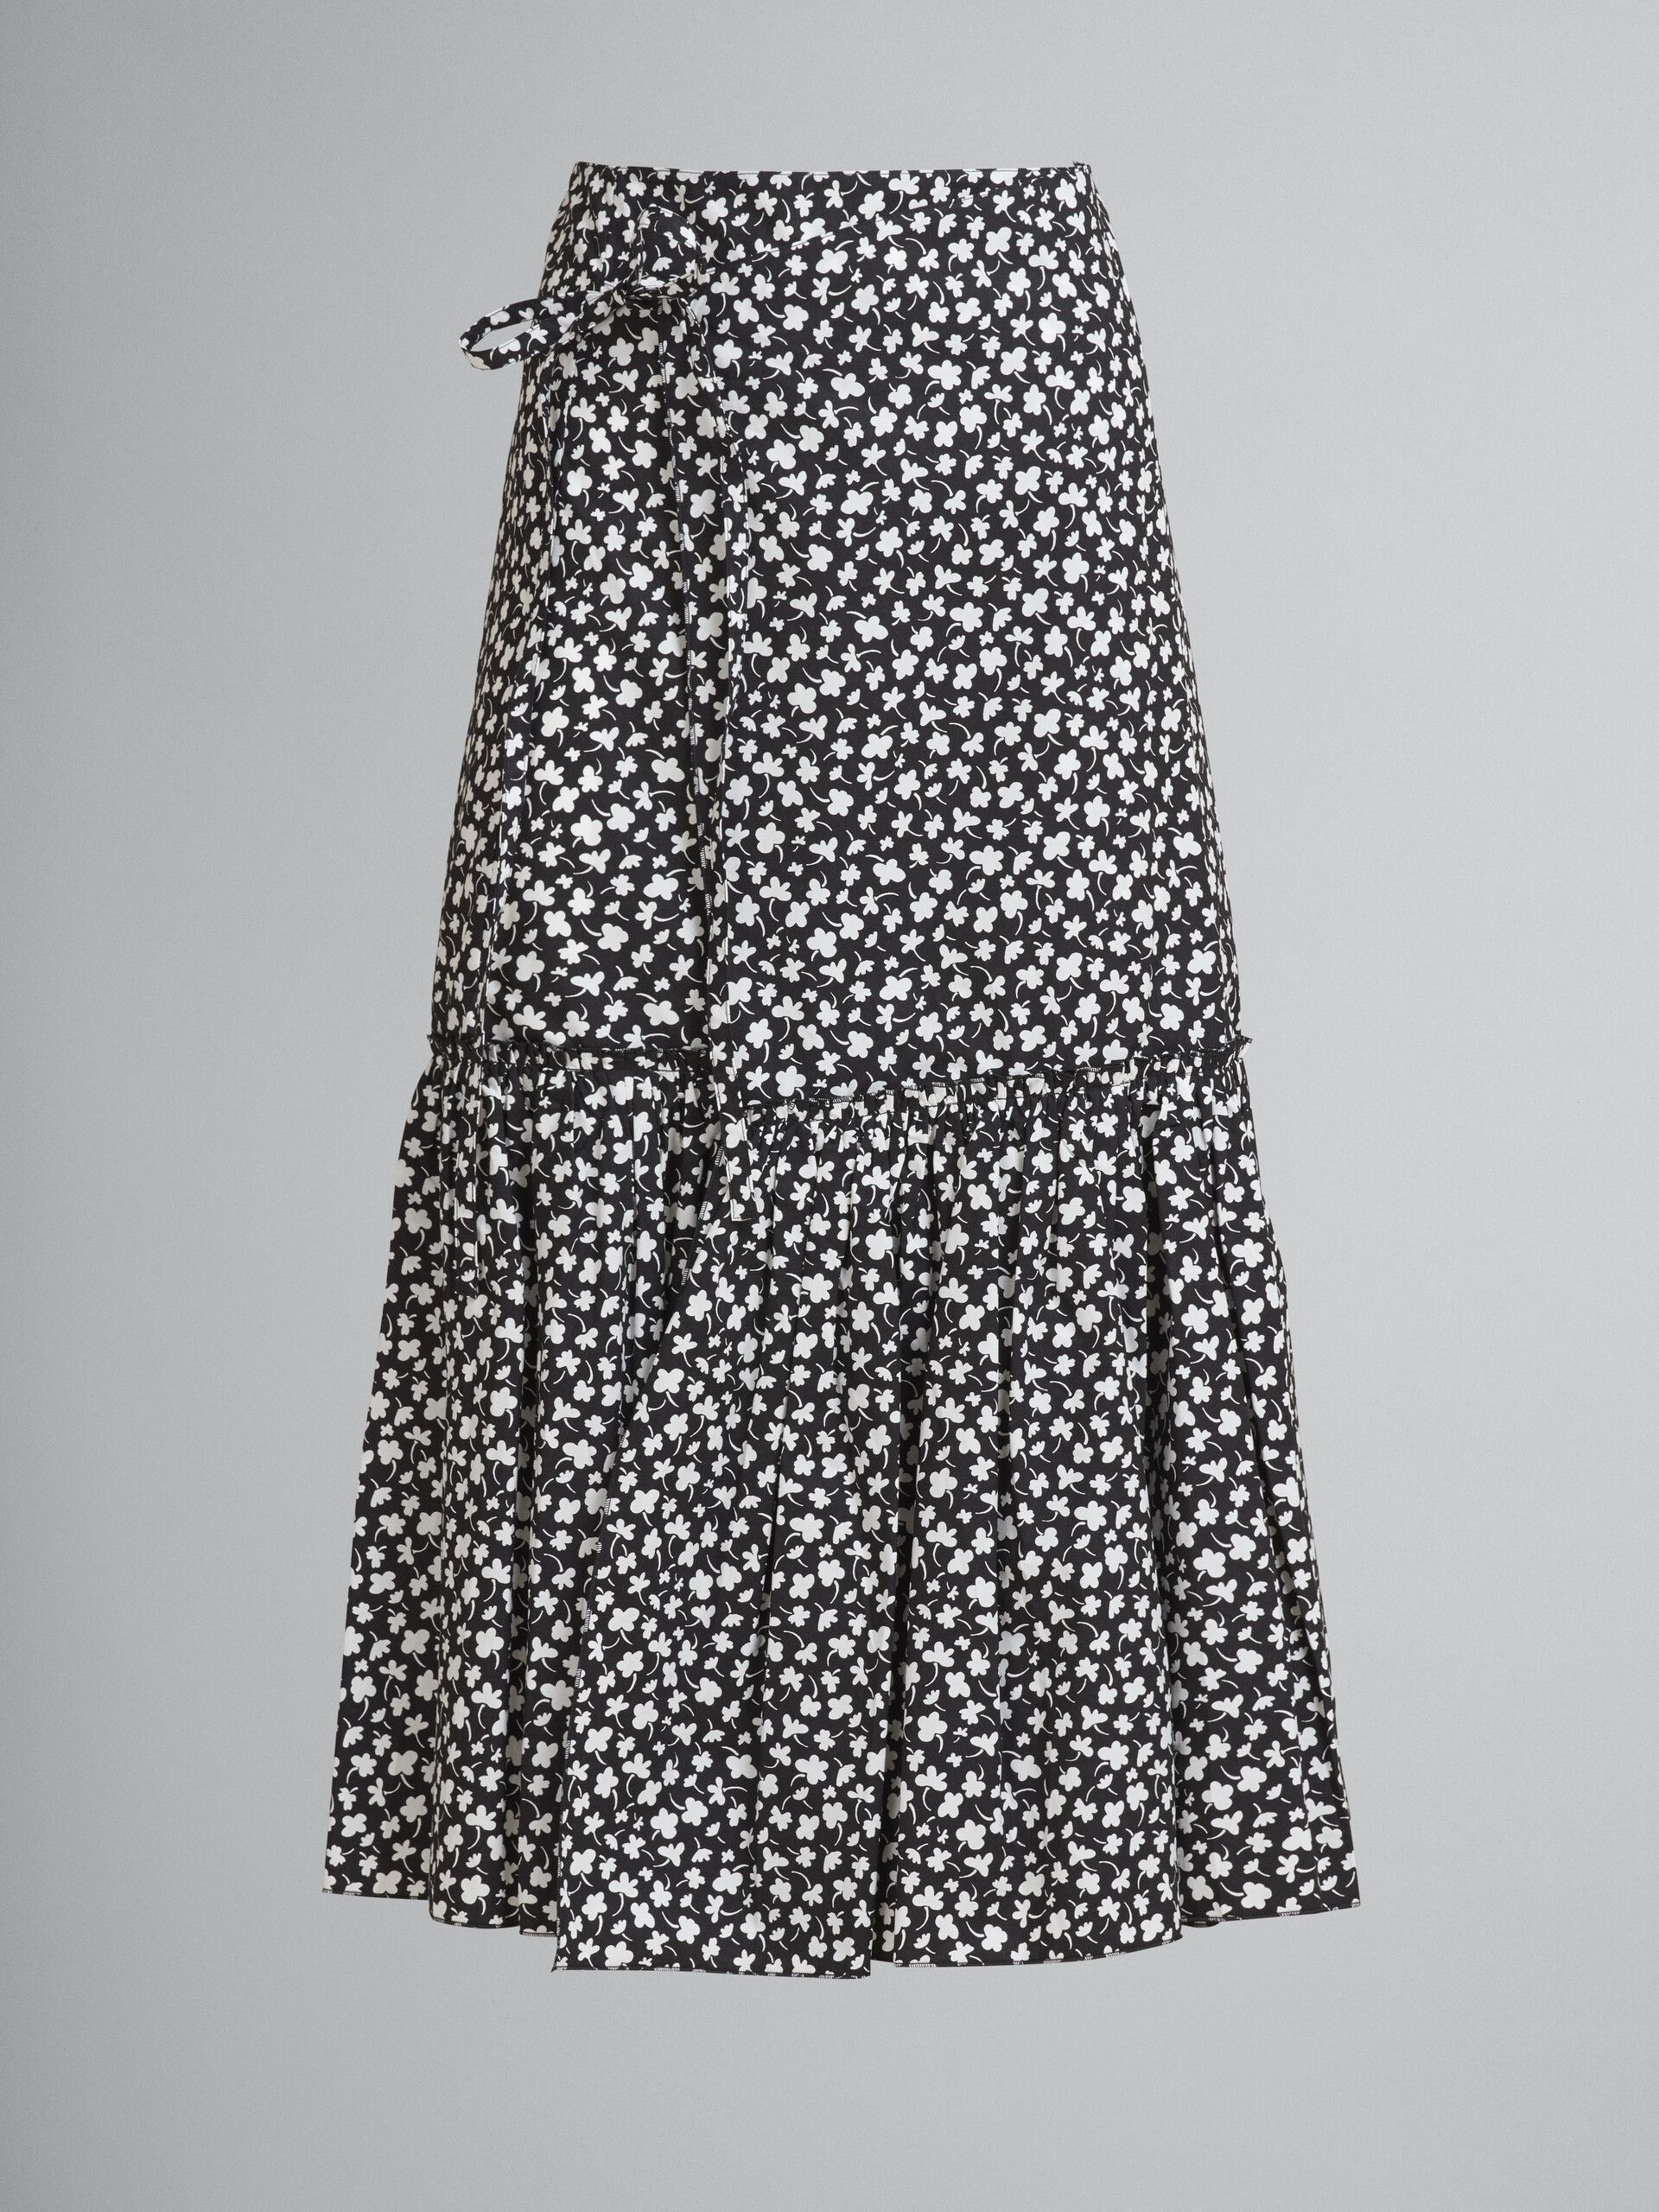 Micro Flower print cotton poplin skirt - Skirts - Image 1